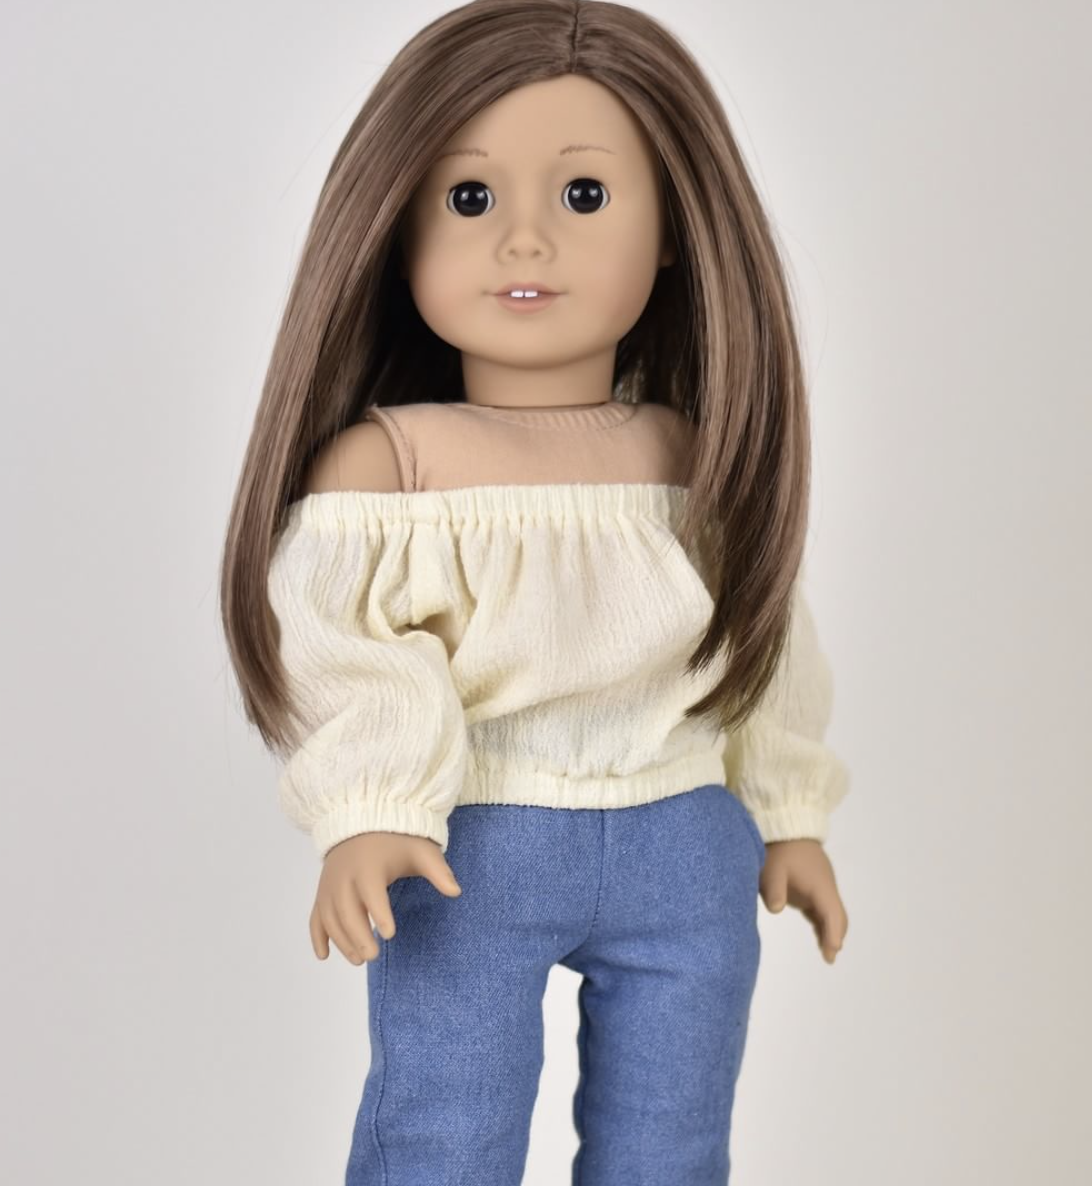 EliteDollWorld: Modern Handmade and Fashionable 18 inch doll clothing ...